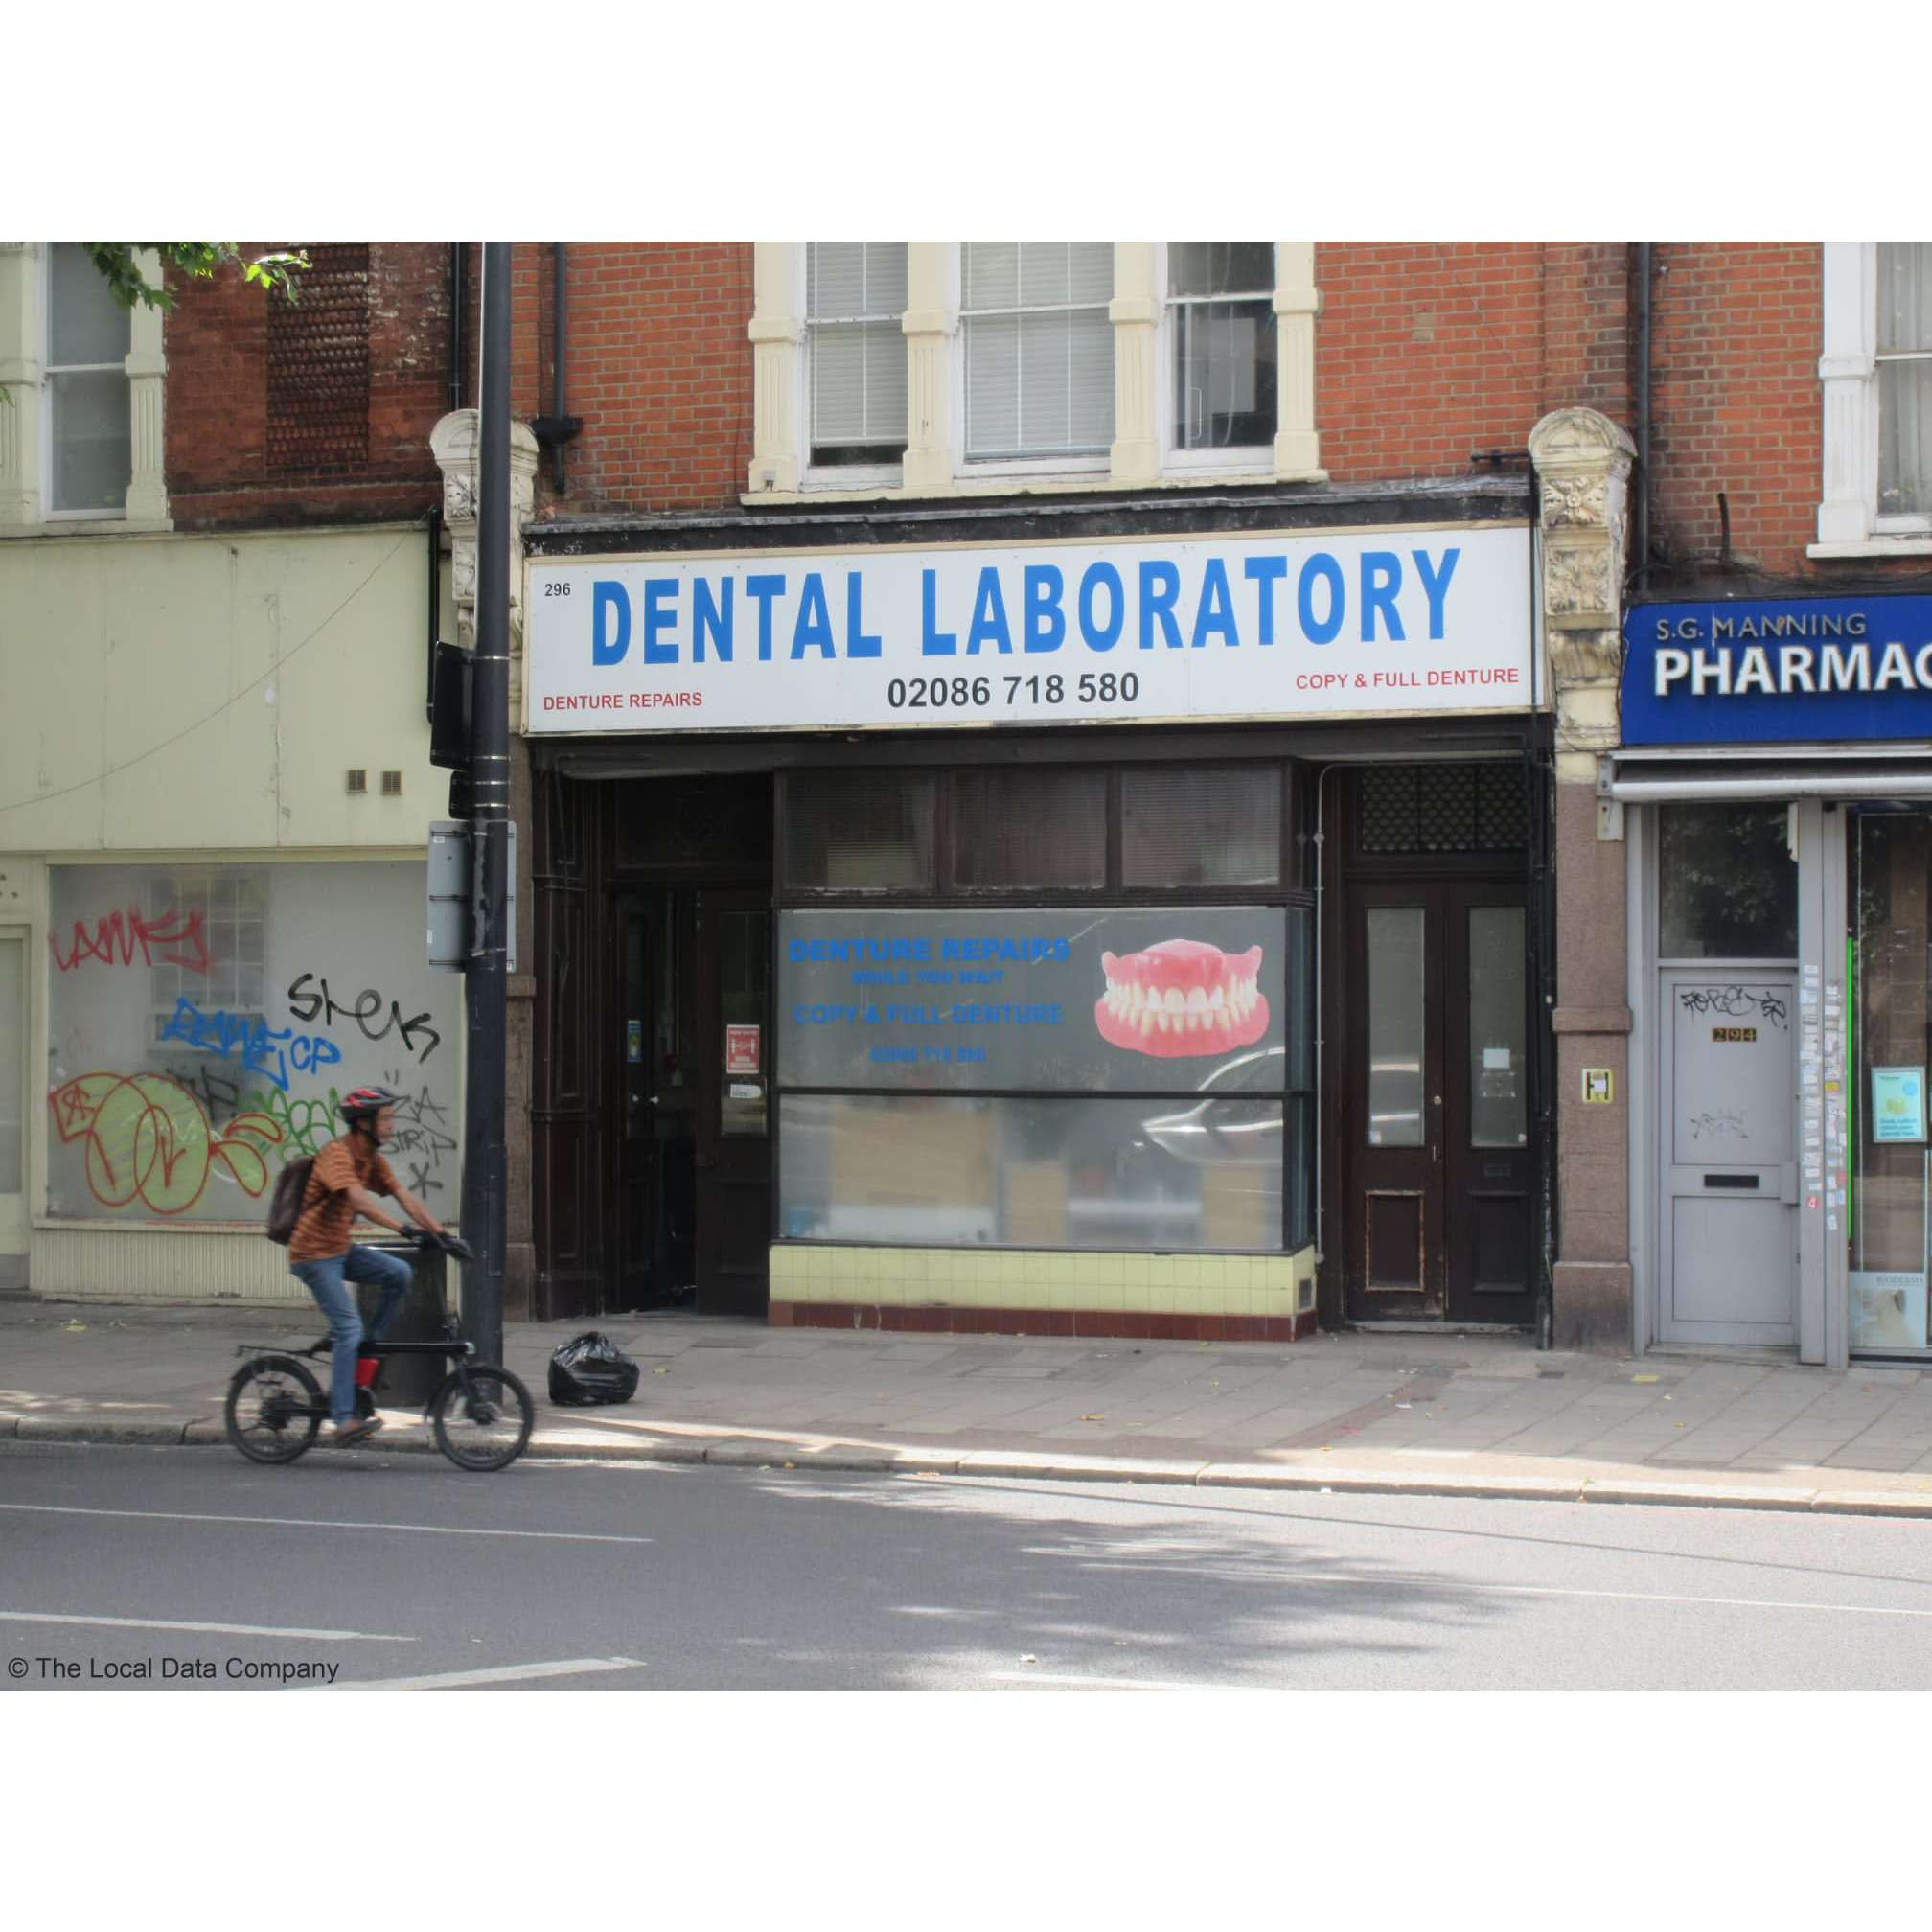 LOGO G Szekely Dental Laboratory London 020 8671 8580